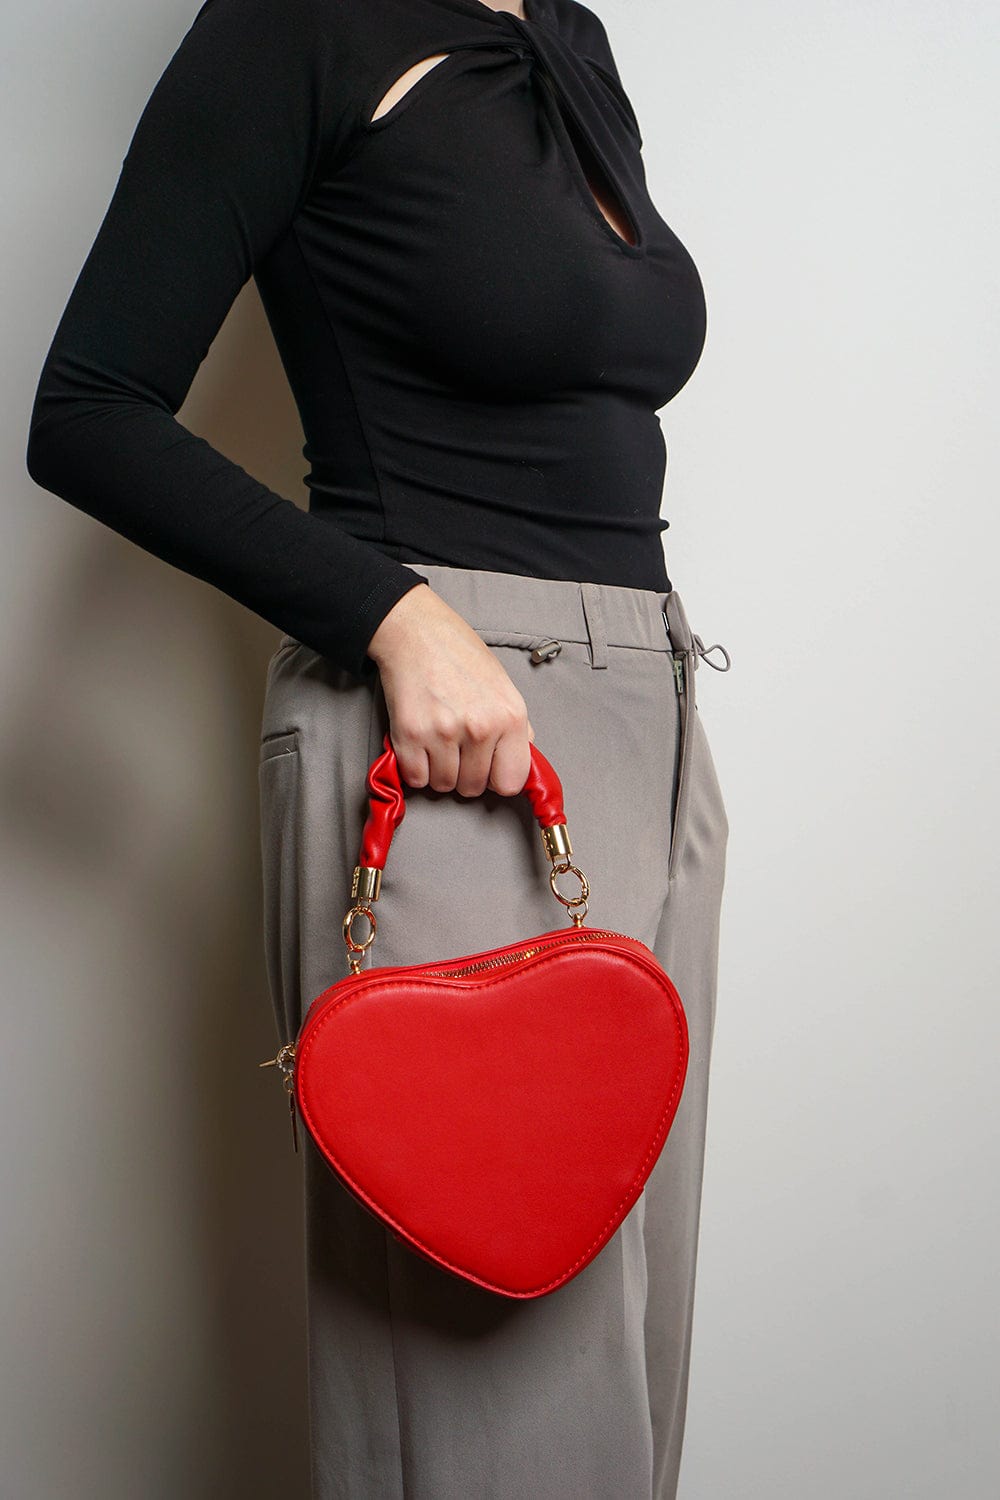 HANDBAGS Red Heart Shaped Handbag - Chloe Dao